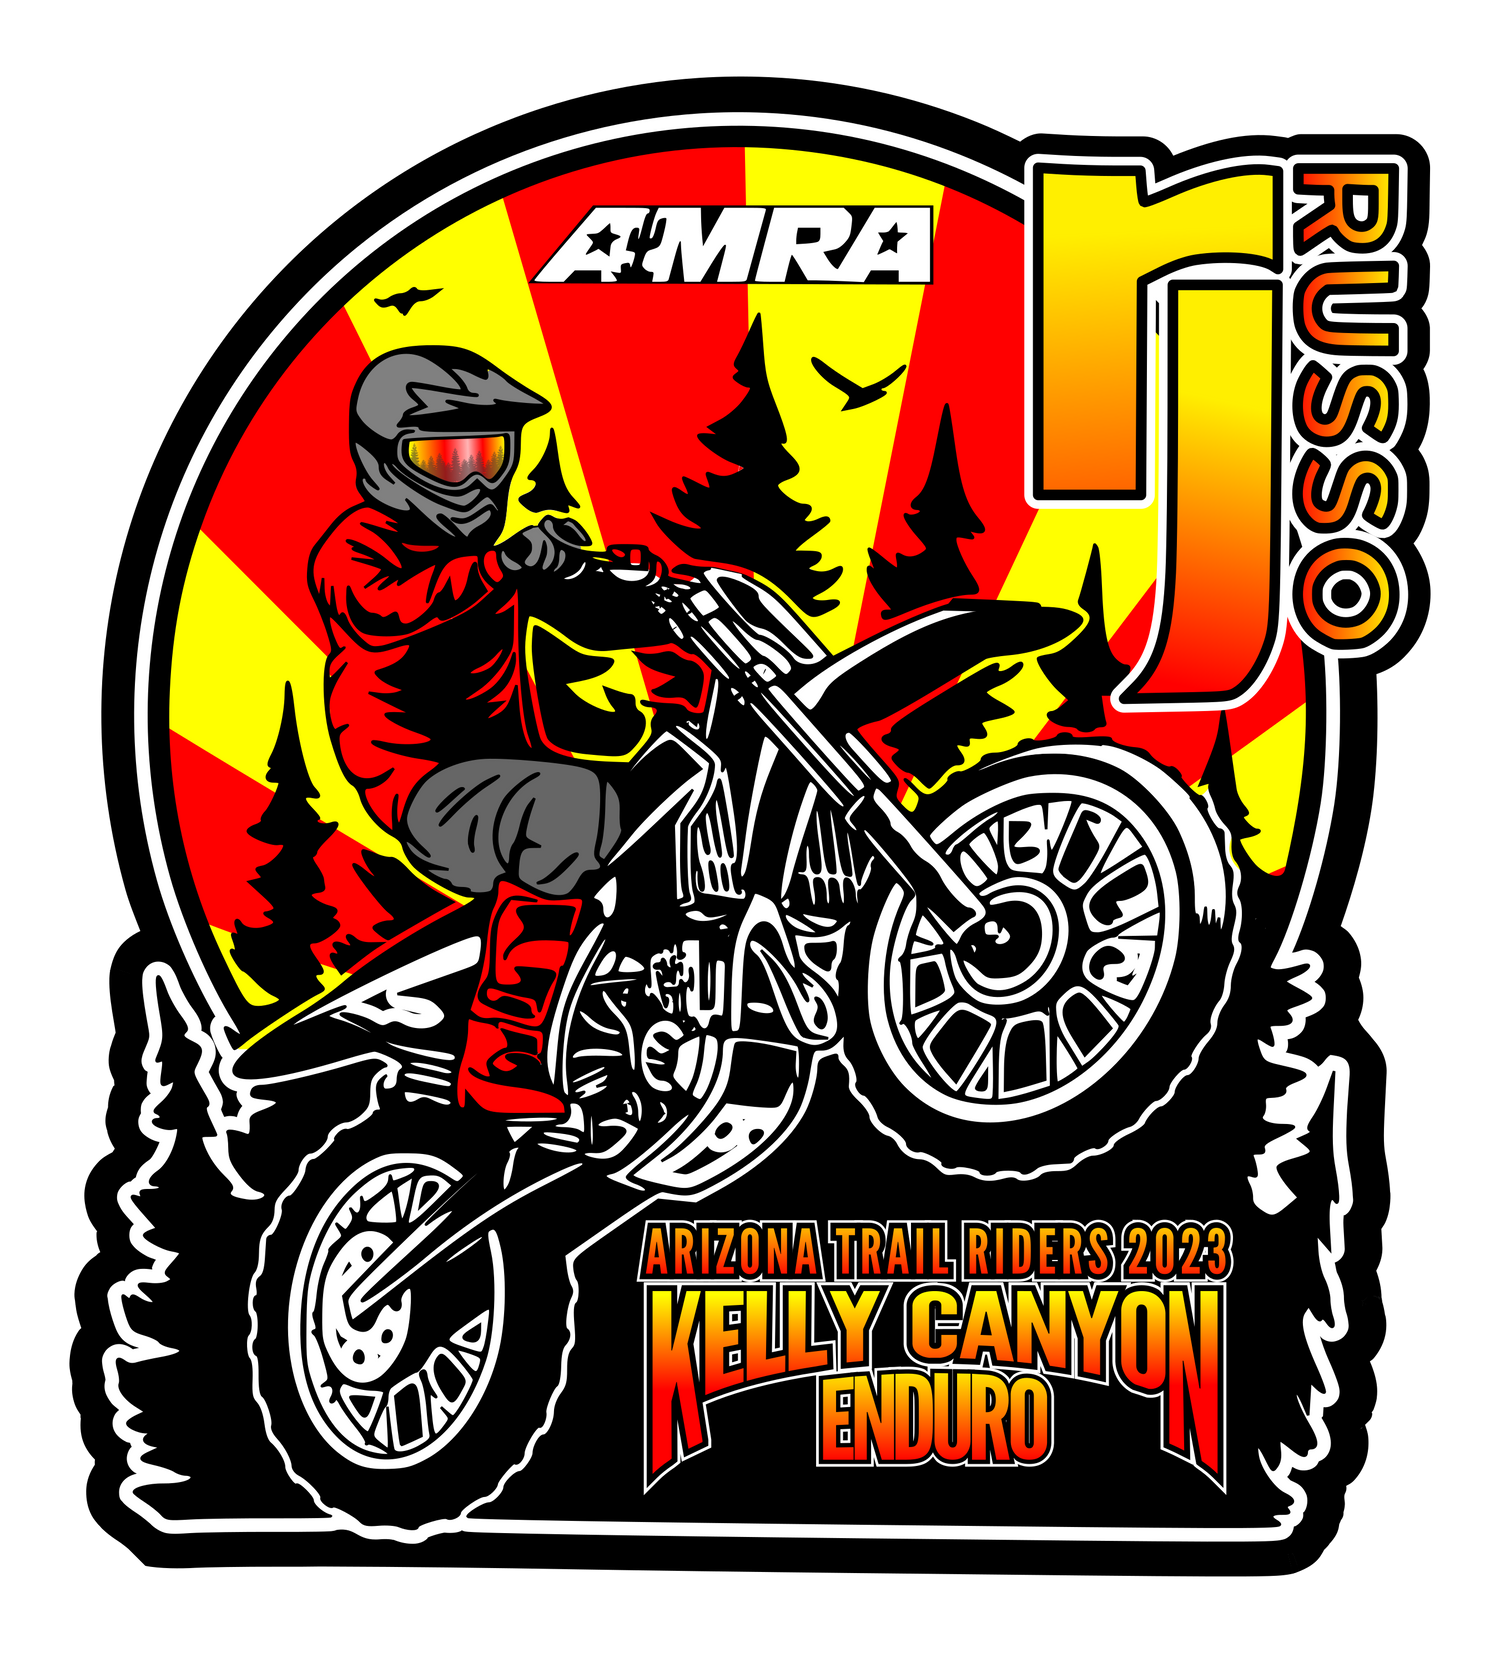 RJ Russo Kelly Canyon Enduro 2023